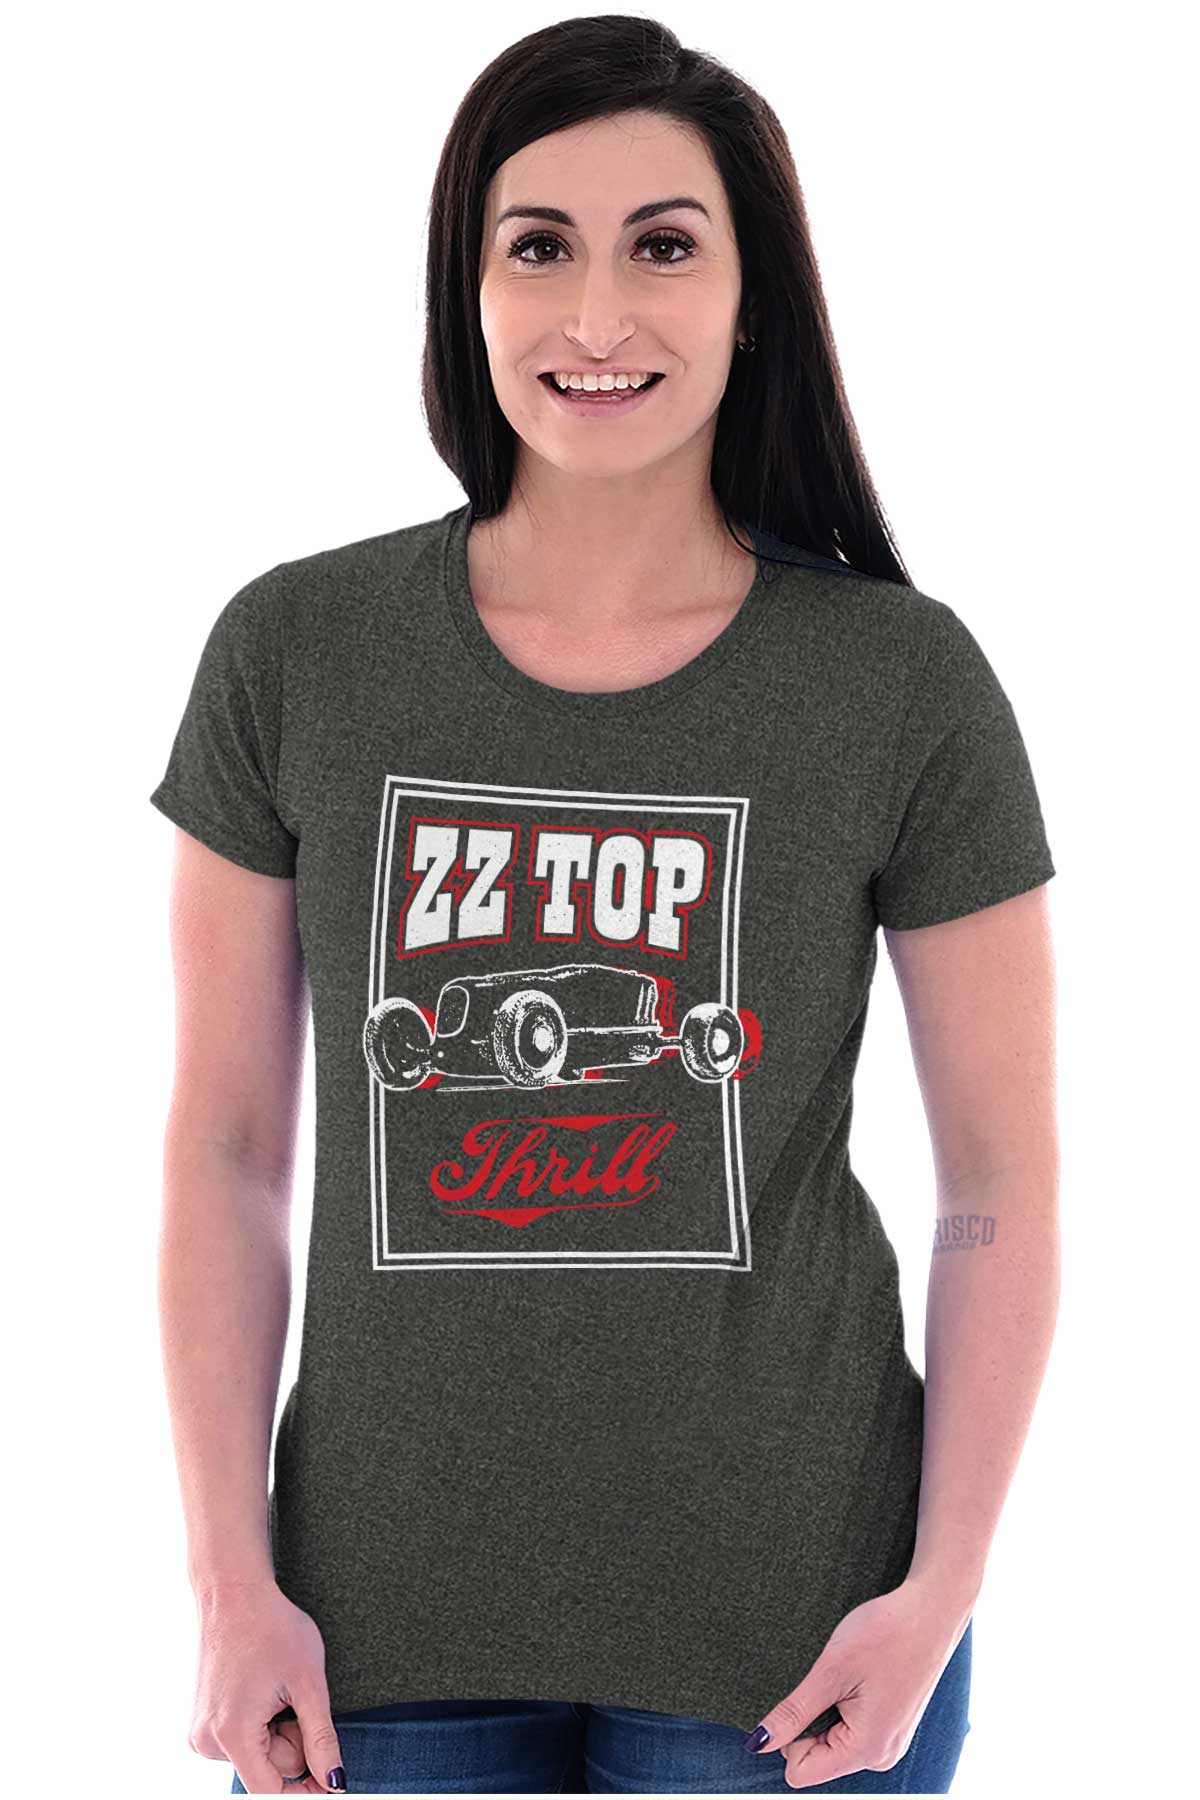 ZZ Top Thrill Official Concert 80s Women's T Shirt Ladies Tee Brisco Brands L - image 1 of 4